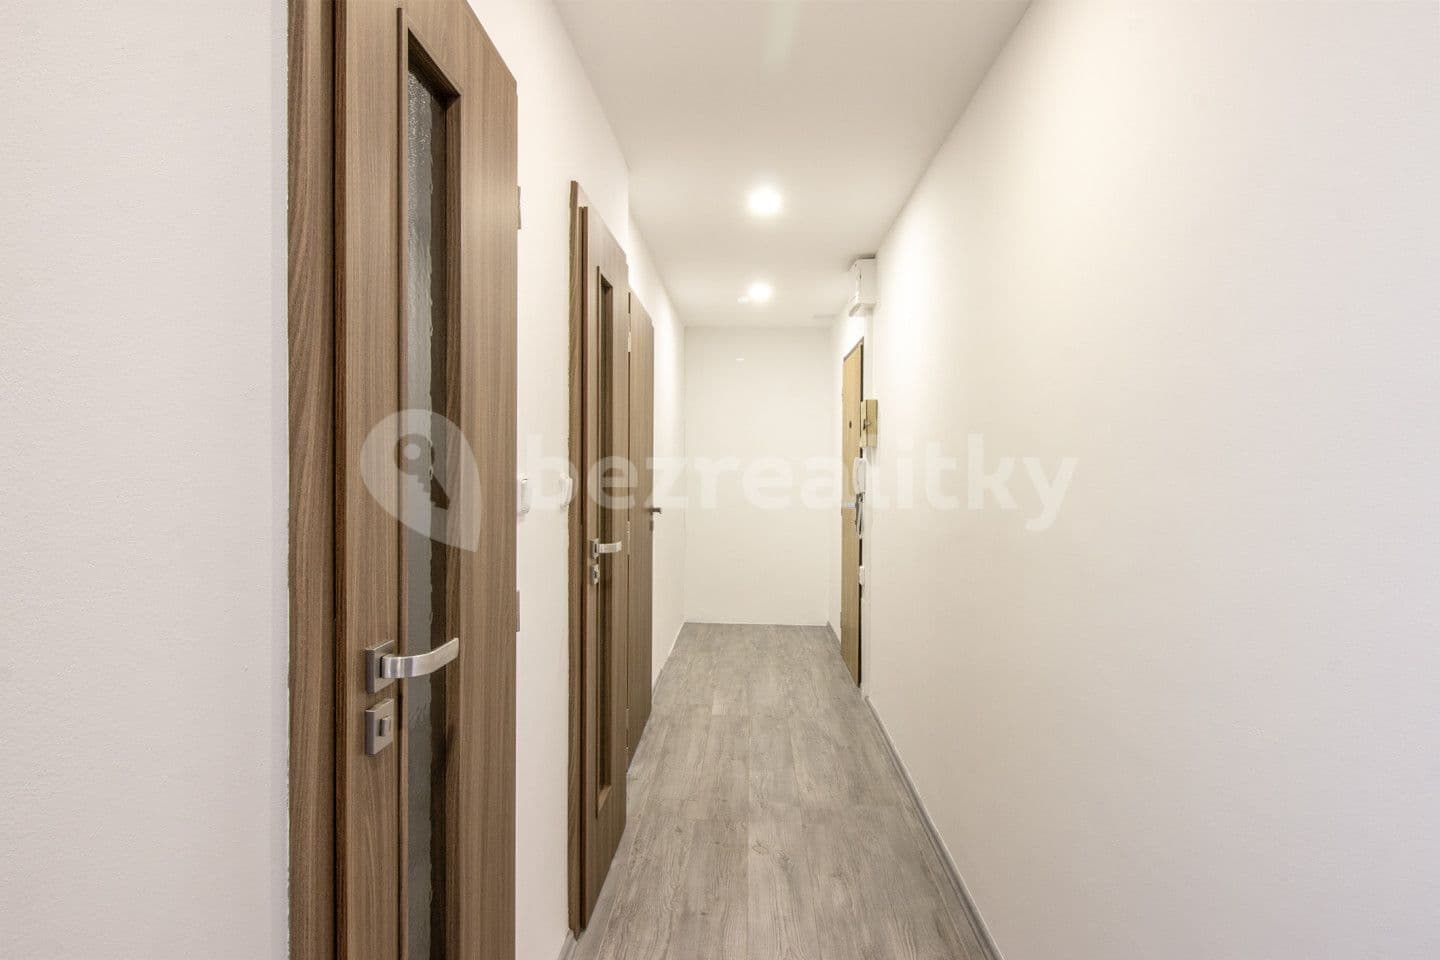 3 bedroom flat for sale, 66 m², Nezvalova, Liberec, Liberecký Region